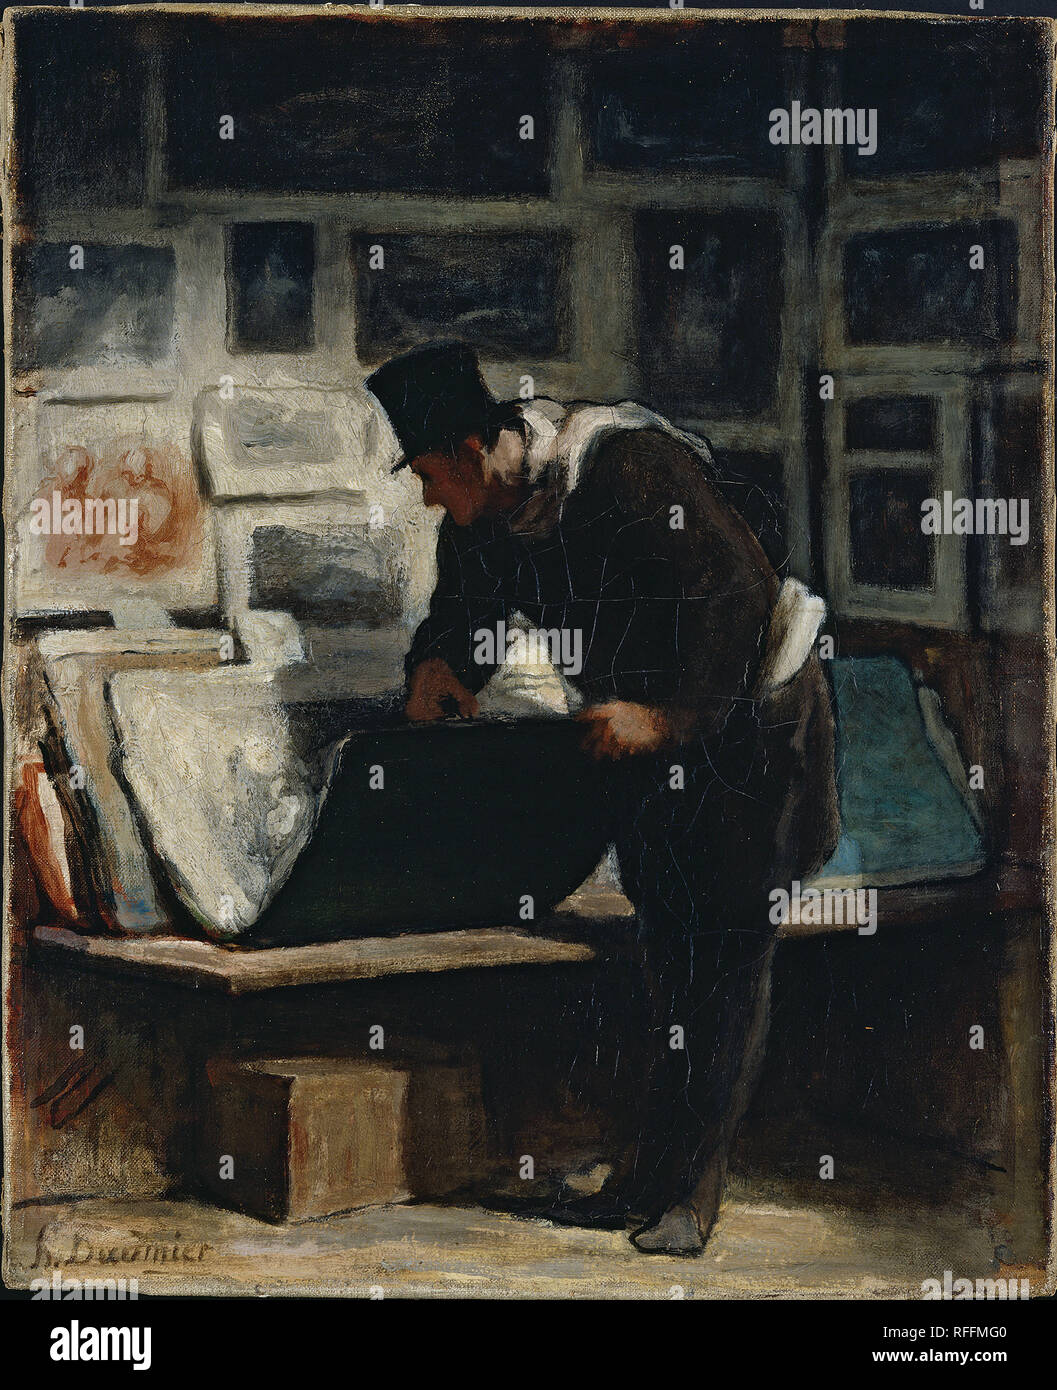 The print collector, Honor Daumier.jpg - RFFMG0 Stock Photo